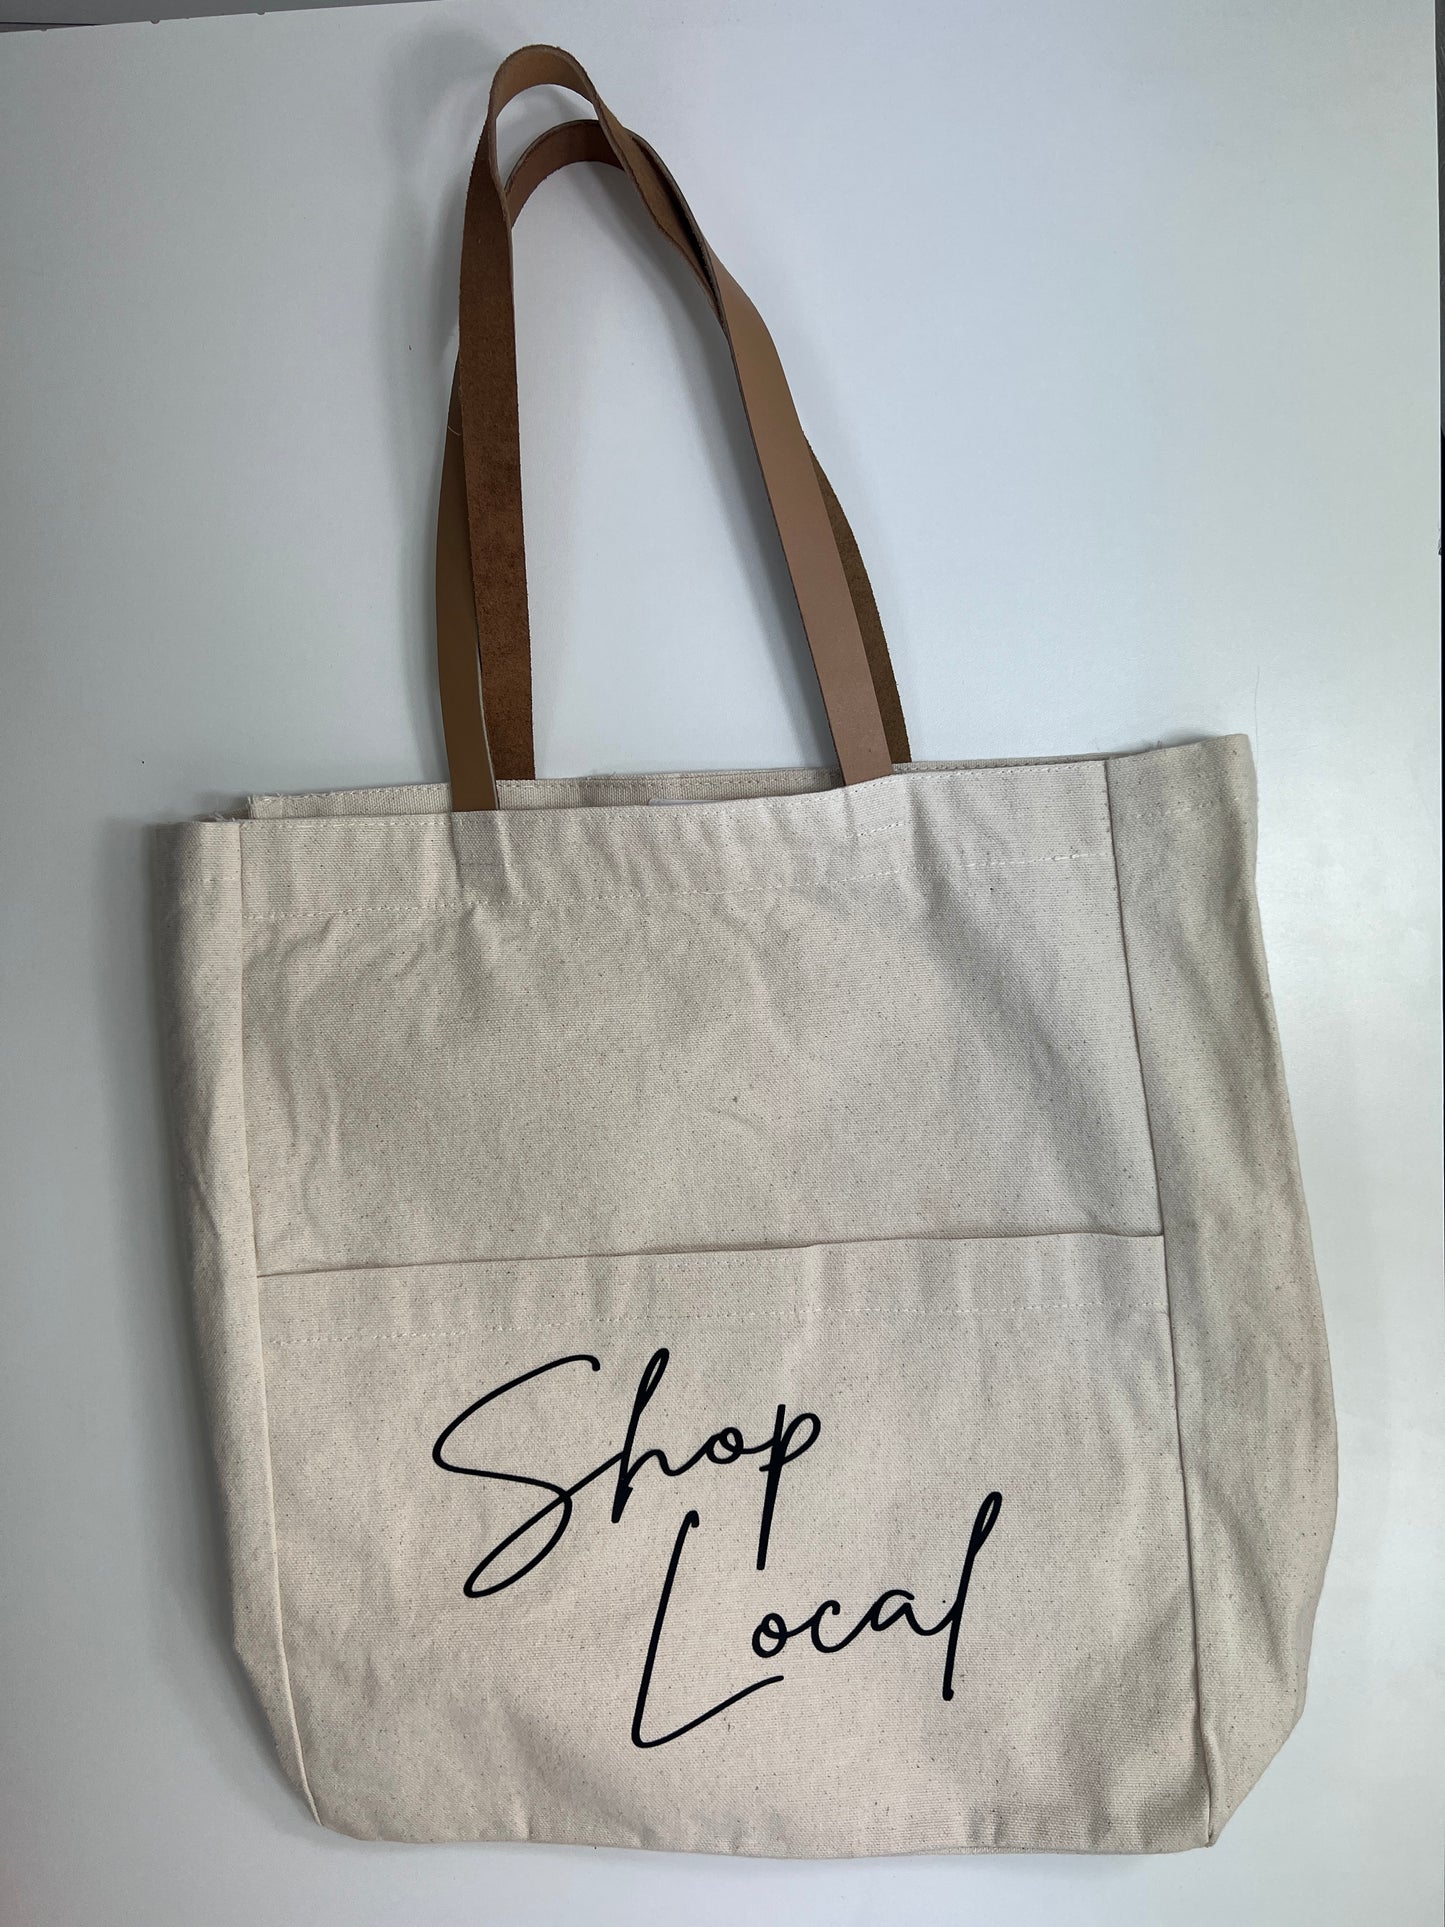 LHOG Shop Local Tote Bag